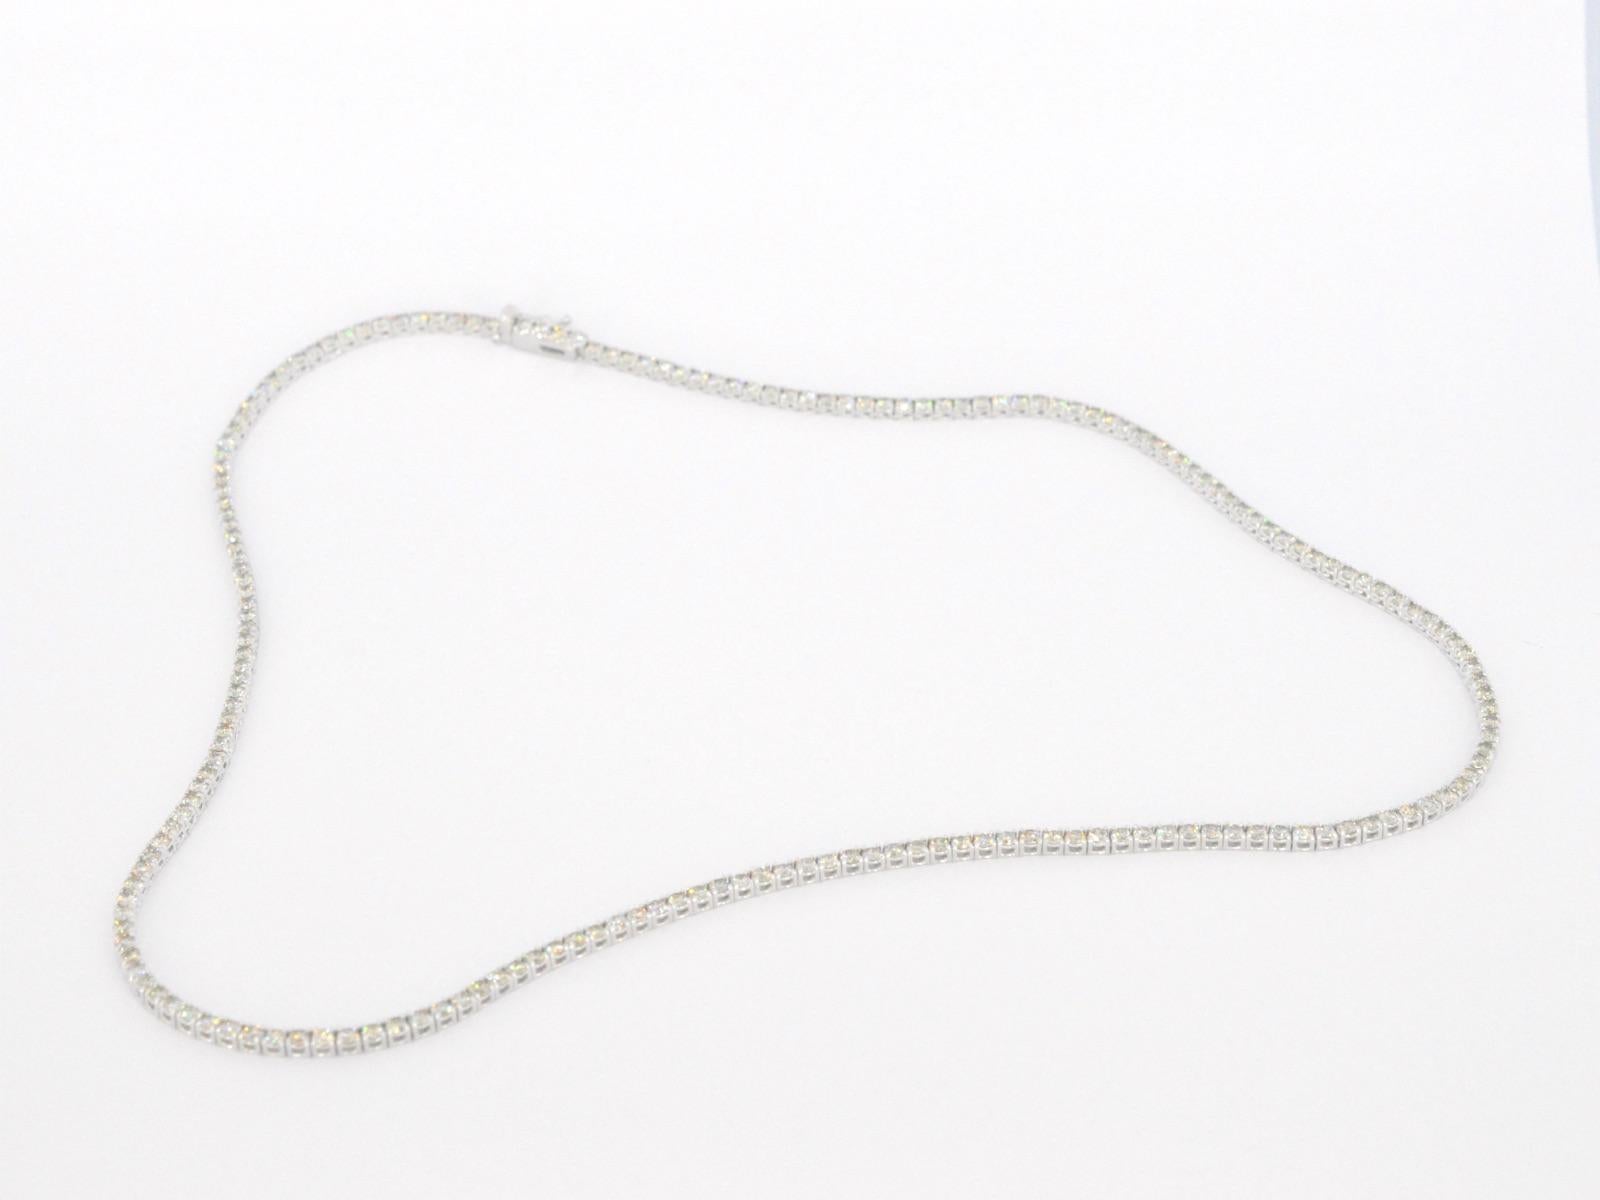 Women's Golden Tennis Necklace with diamonds 5.60 carat For Sale